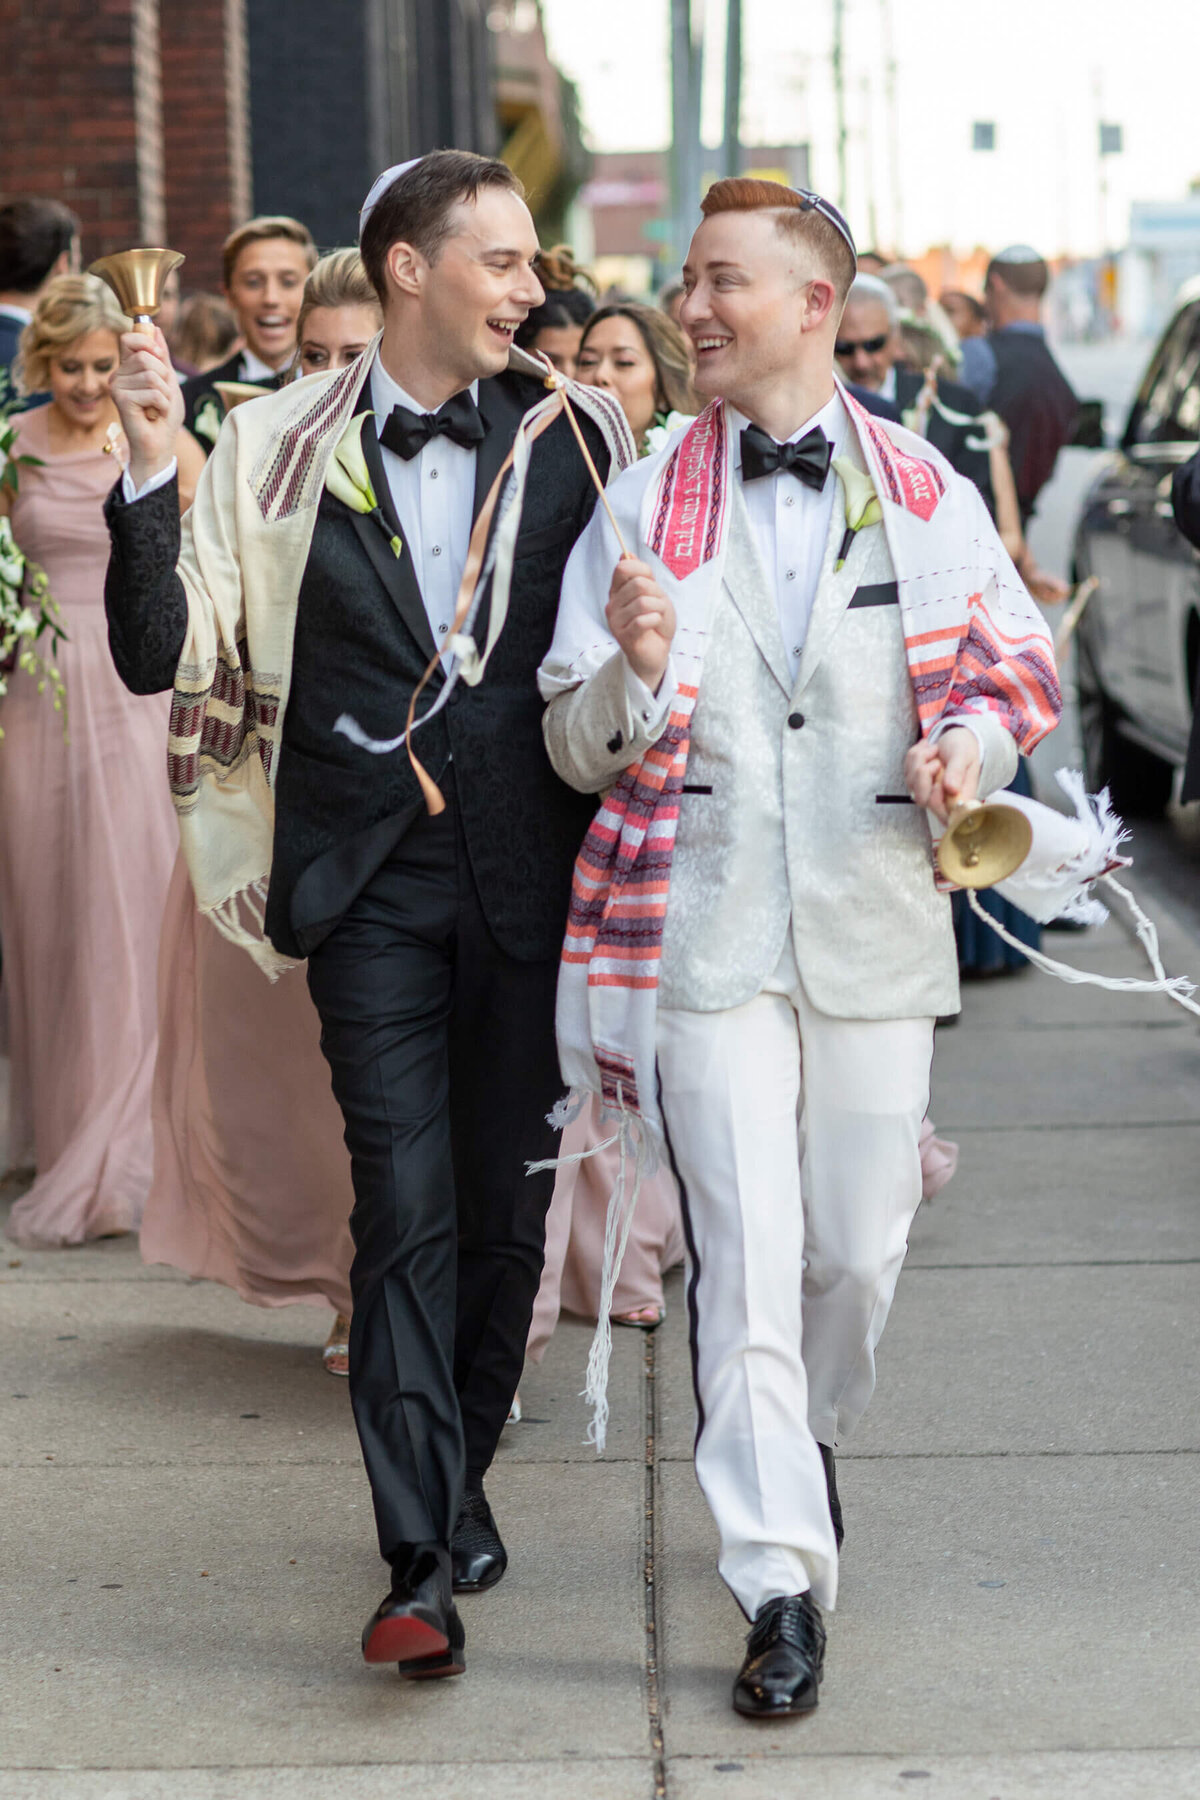 Black and white custom tuxedos on grooms at Jewish wedding ceremony